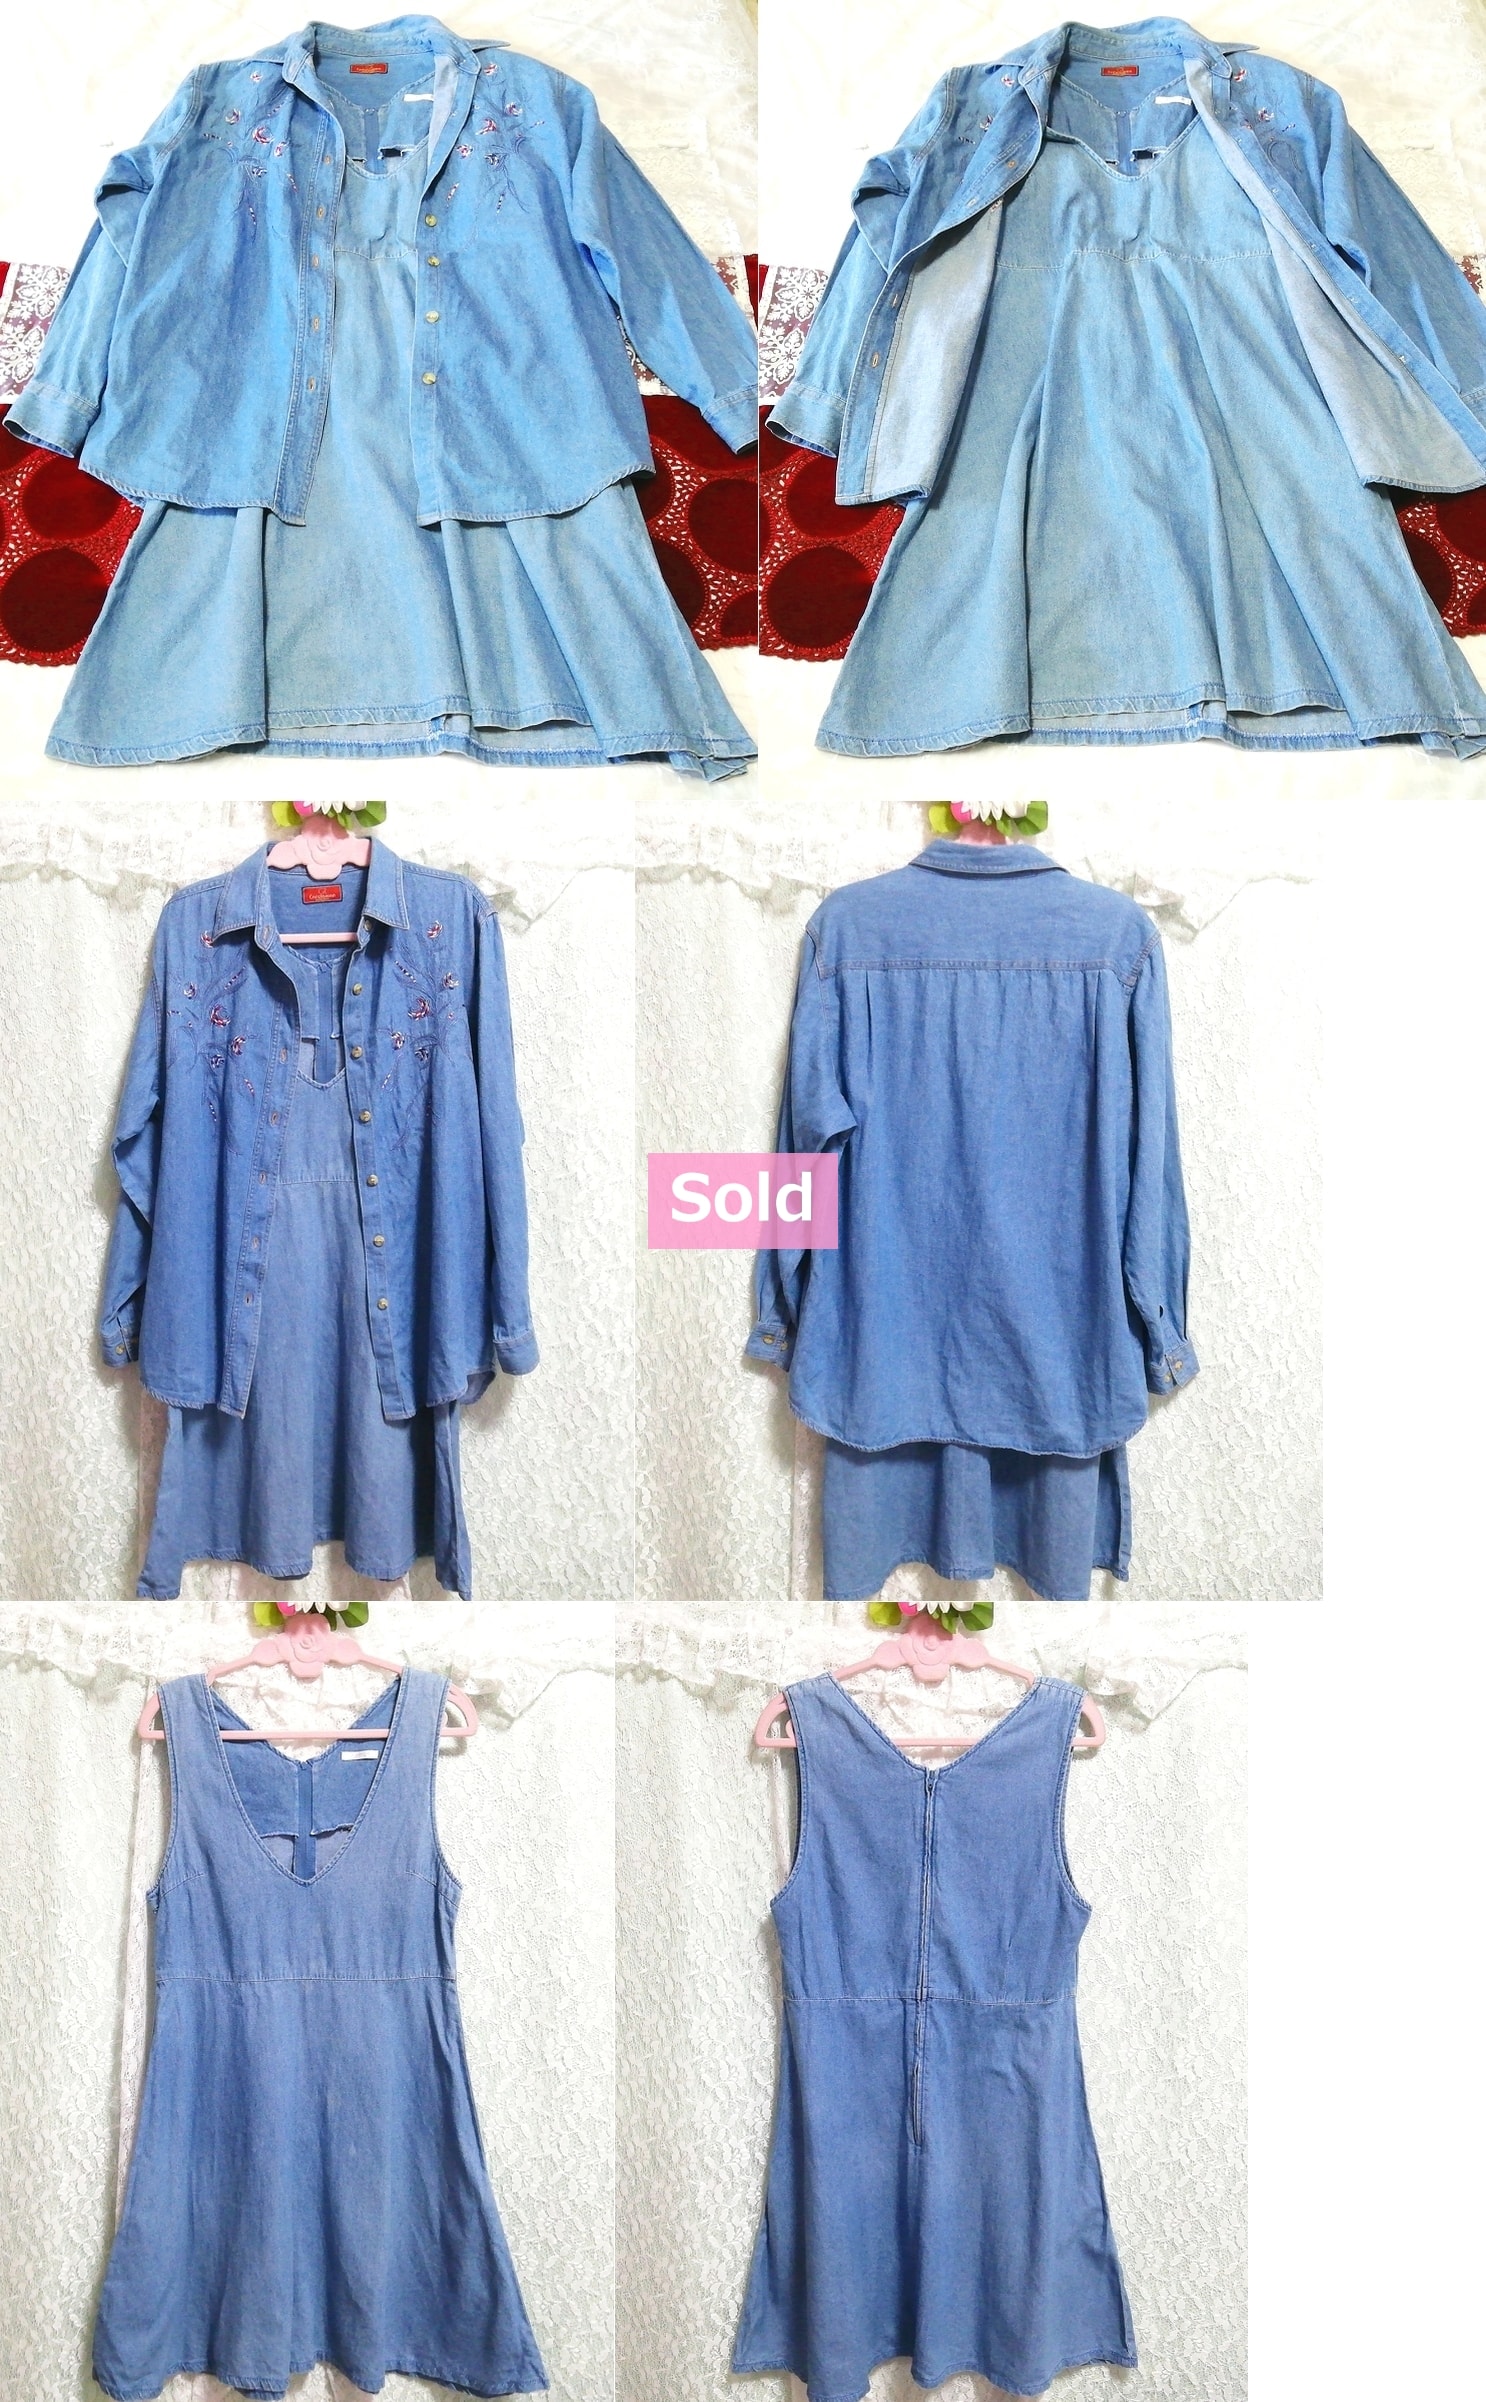 Denim light blue embroidery cotton negligee nightgown cardigan dress 2P, fashion, ladies' fashion, nightwear, pajamas